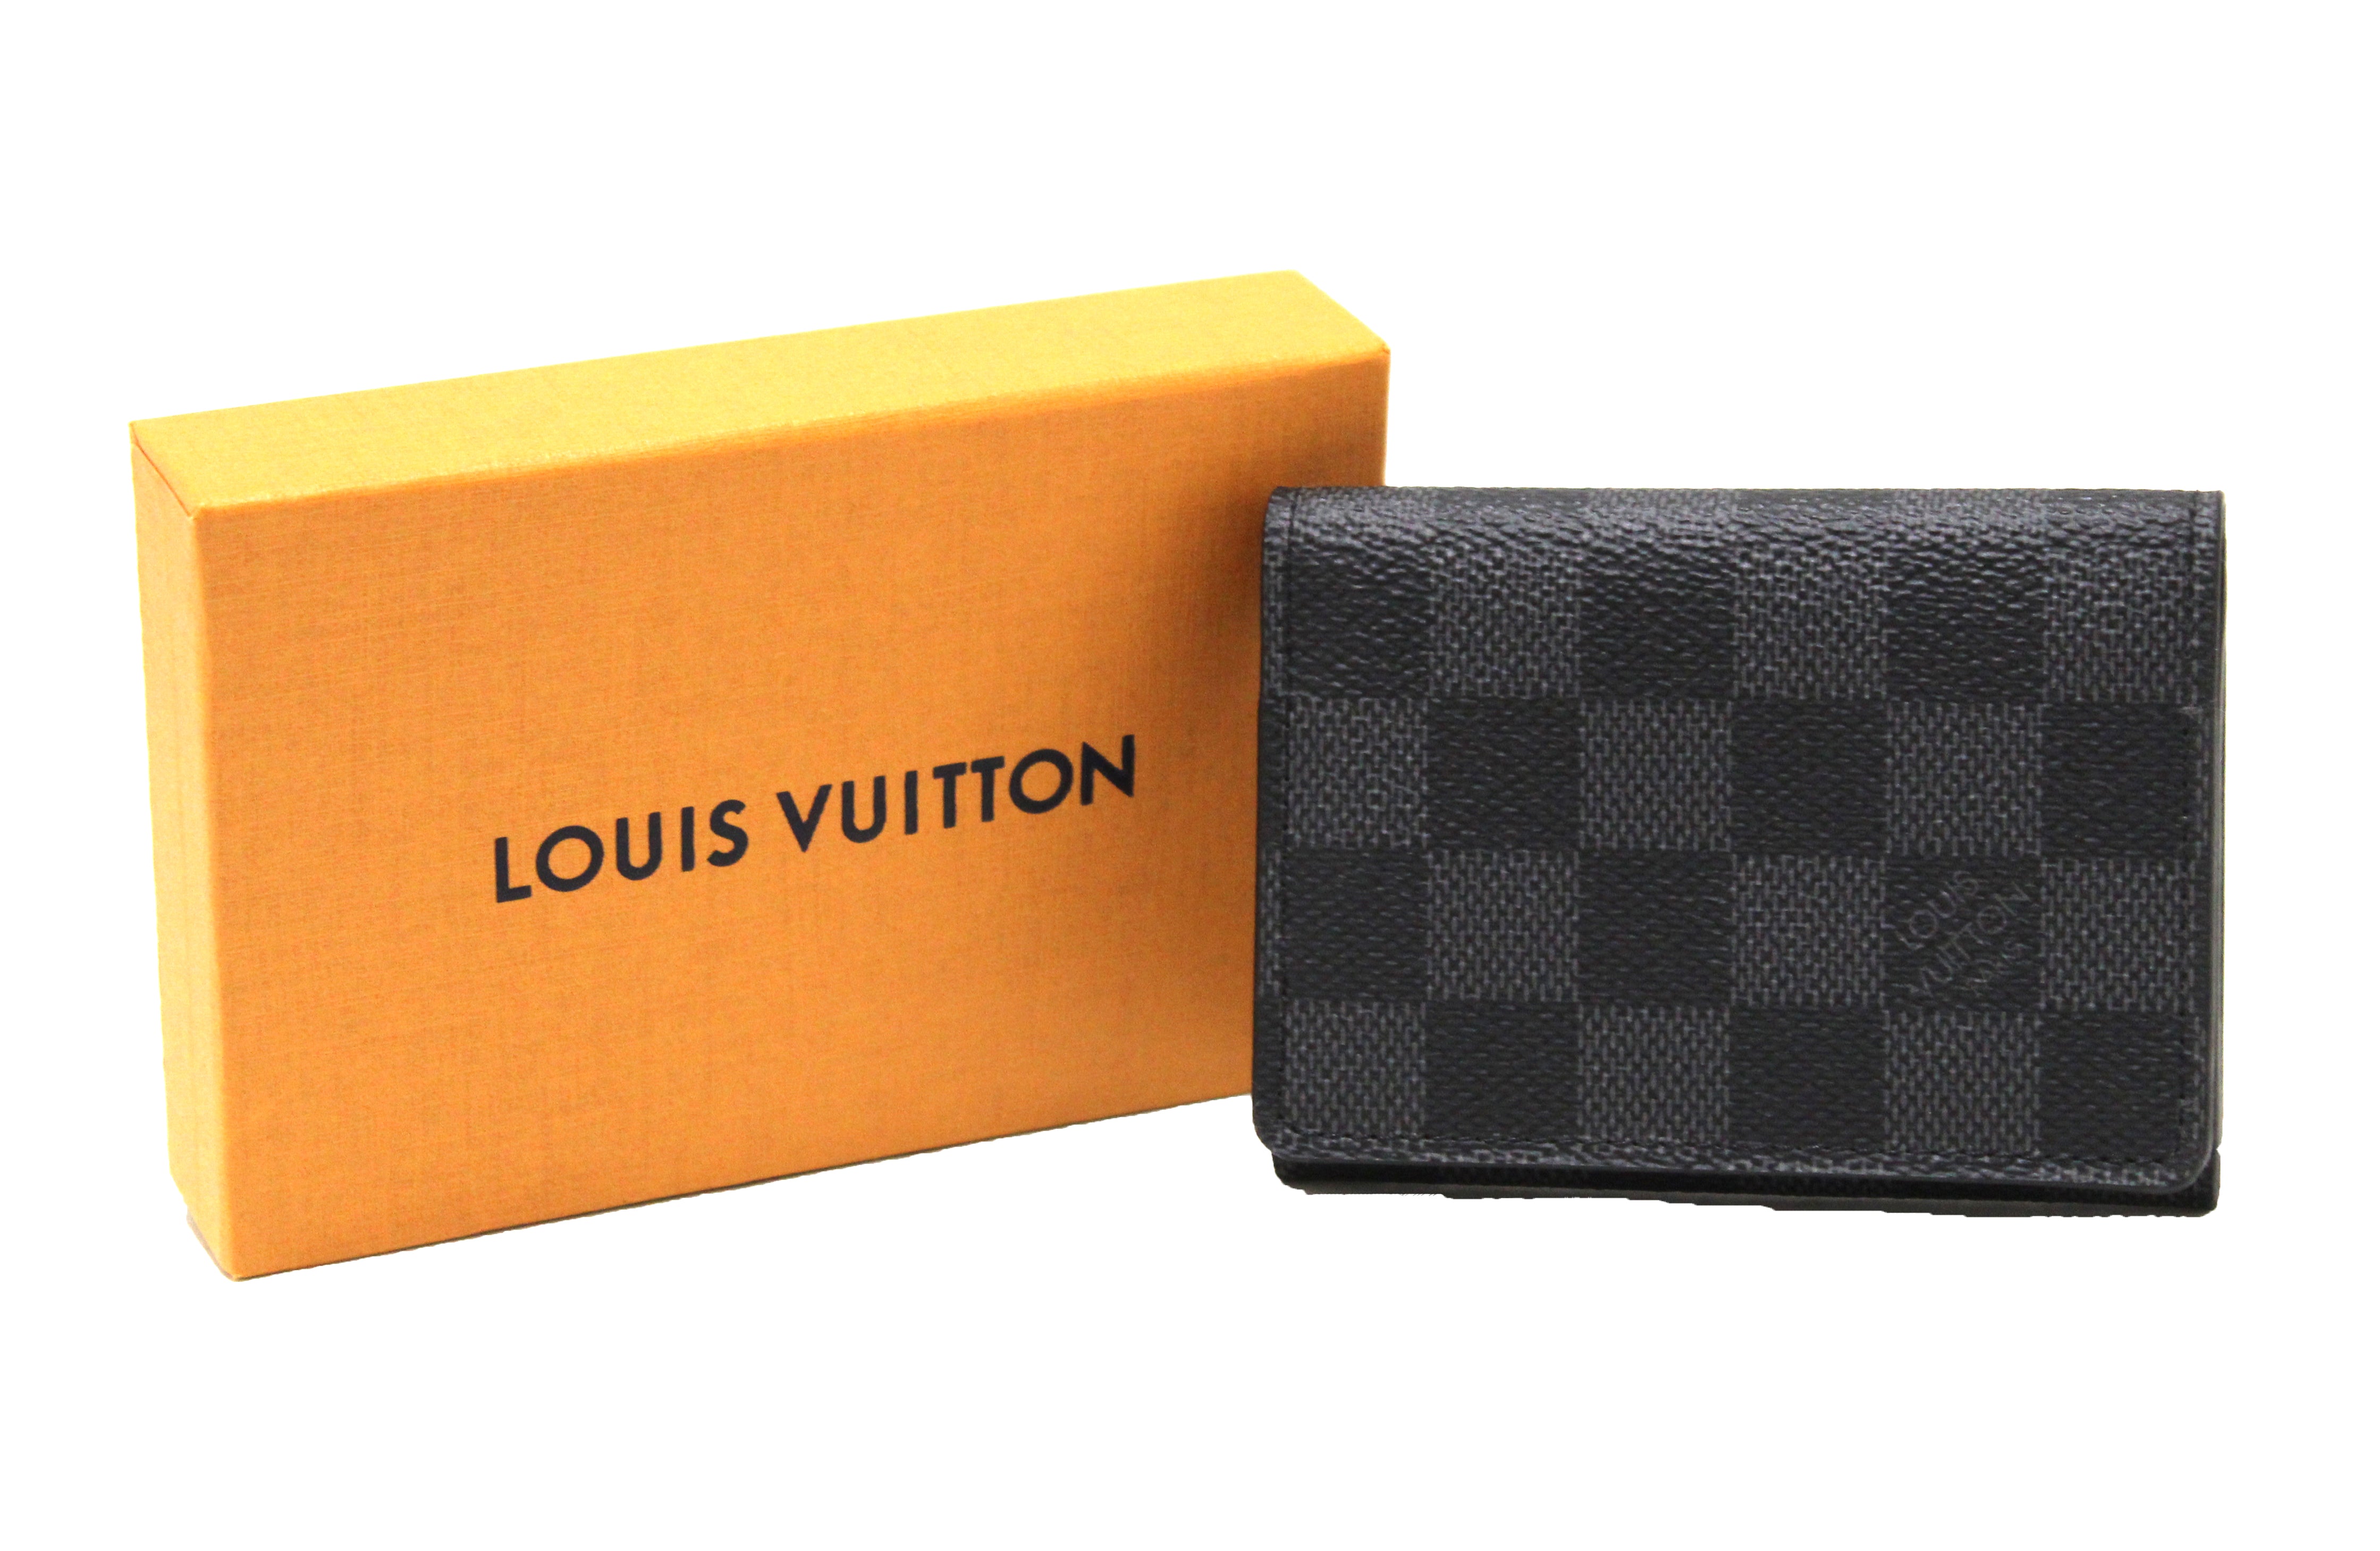 Louis Vuitton Monogram Envelope Business Card Holder - modaselle